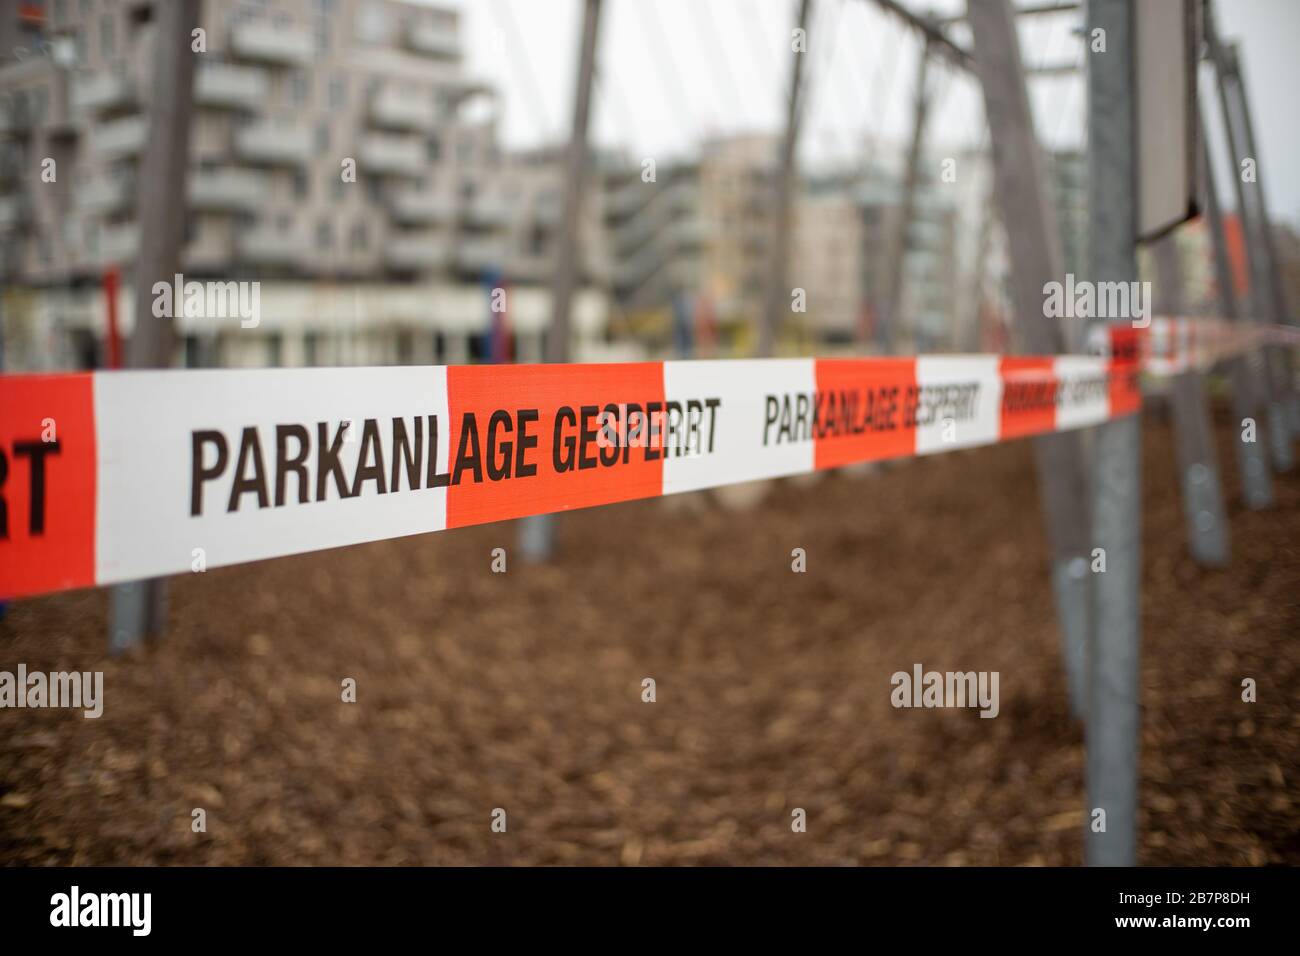 Vienna, Austria - 03.17.2020 Playground closed due due Corona virus crisis. German words „Parkanlage gesperrt“ means Playground is closed. Stock Photo